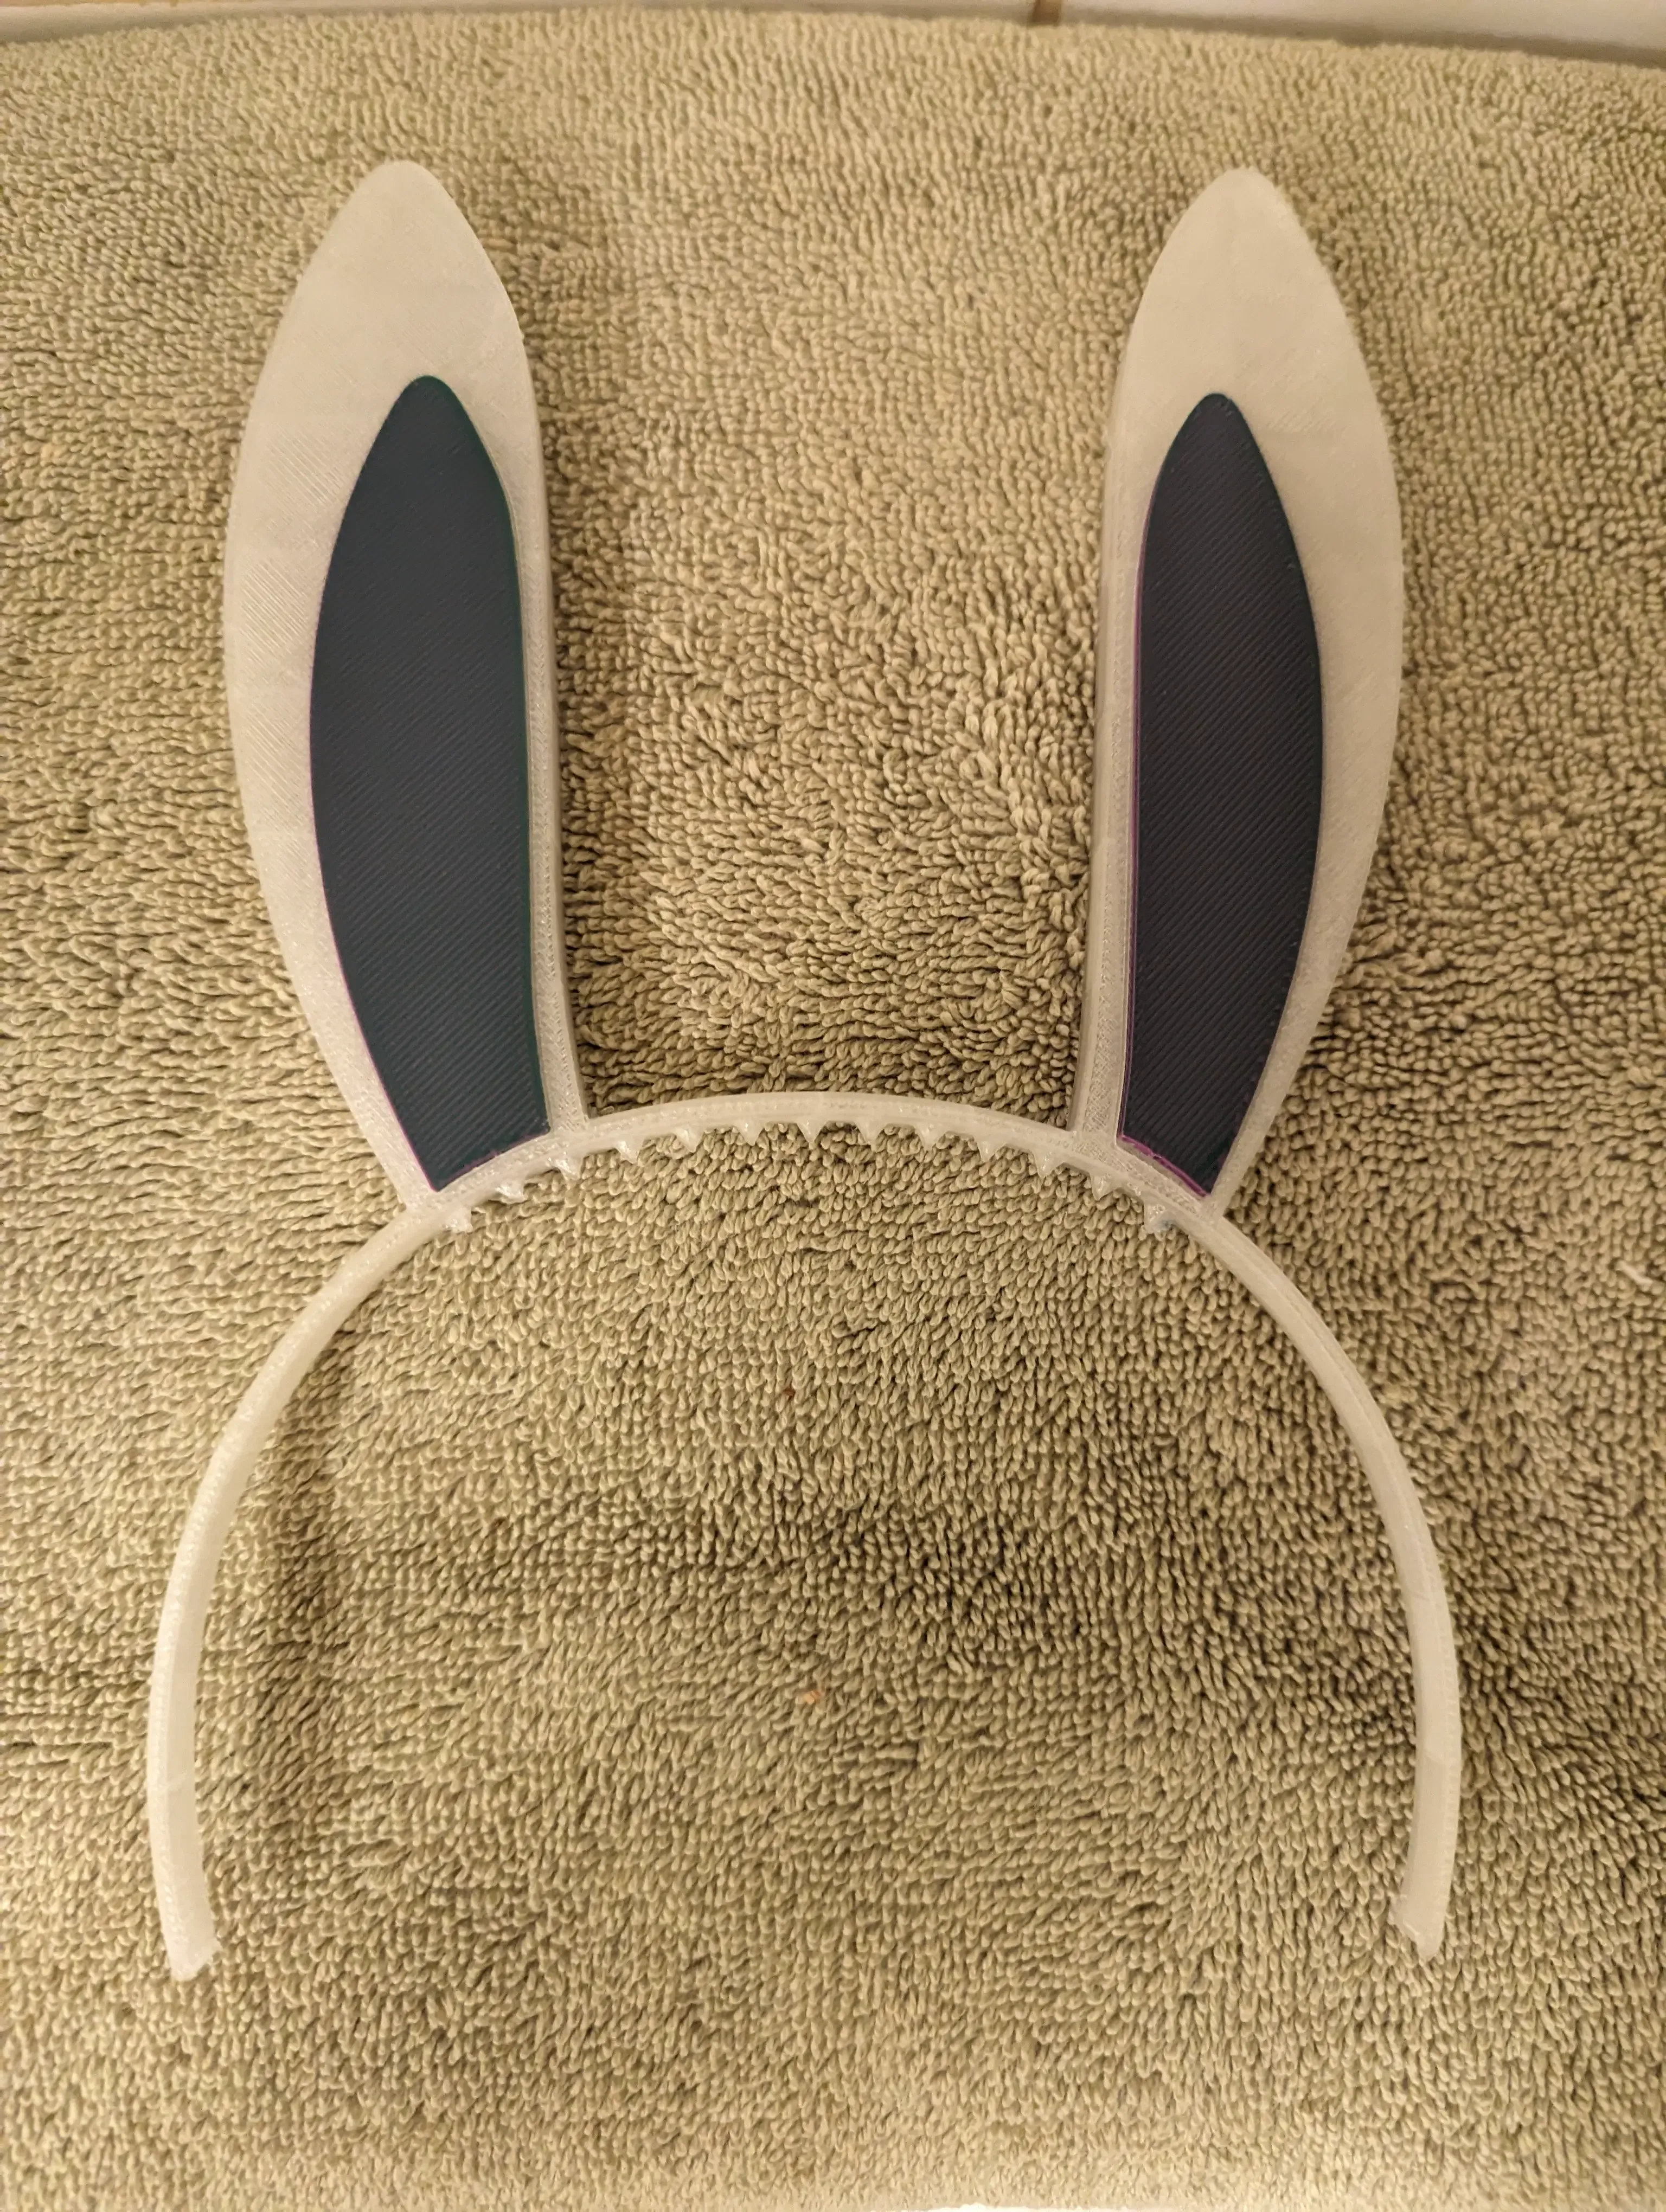 Bunny Ears Dual Tone - Fits 250mm!